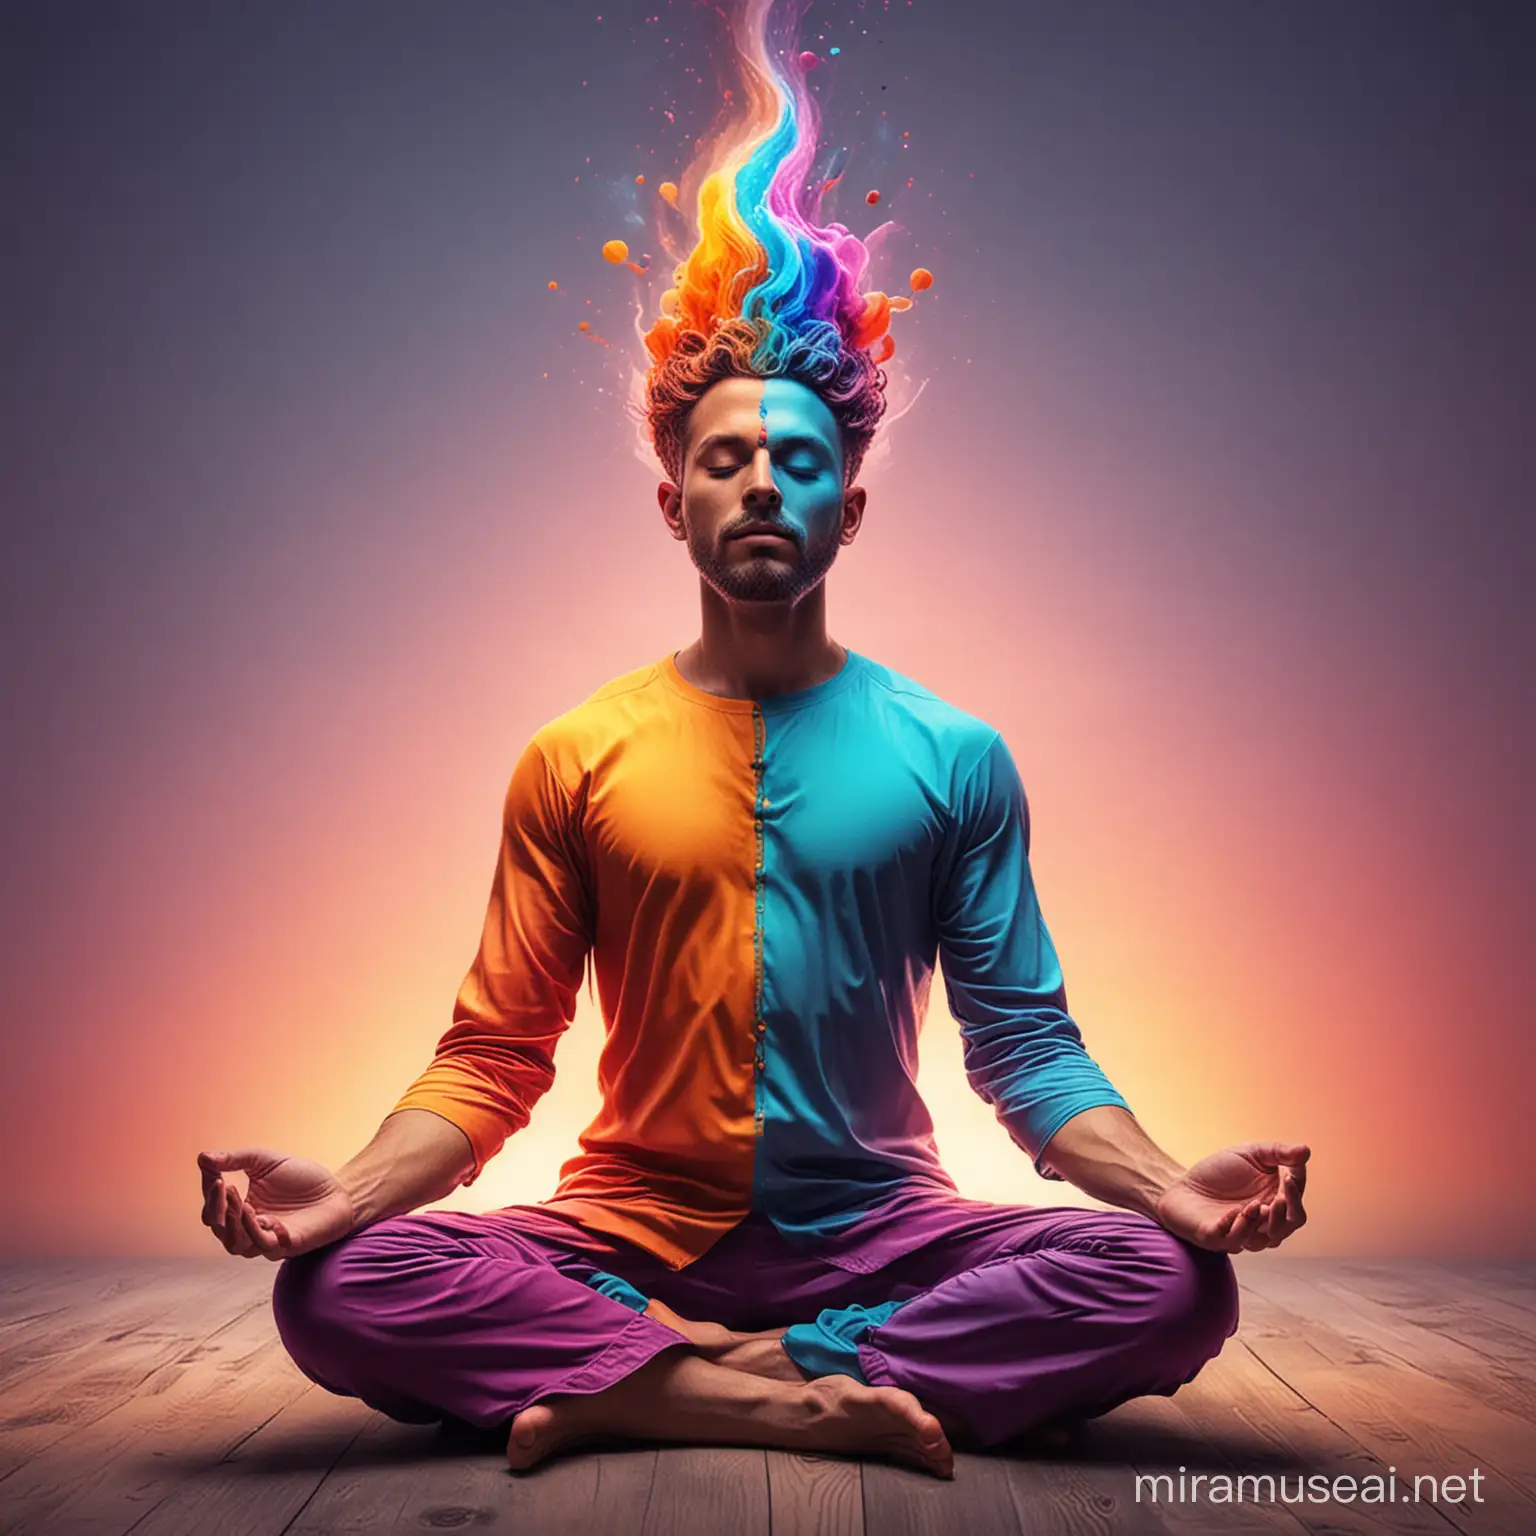 Vibrant Psychotic Man Meditating in Colorful Surreal Setting